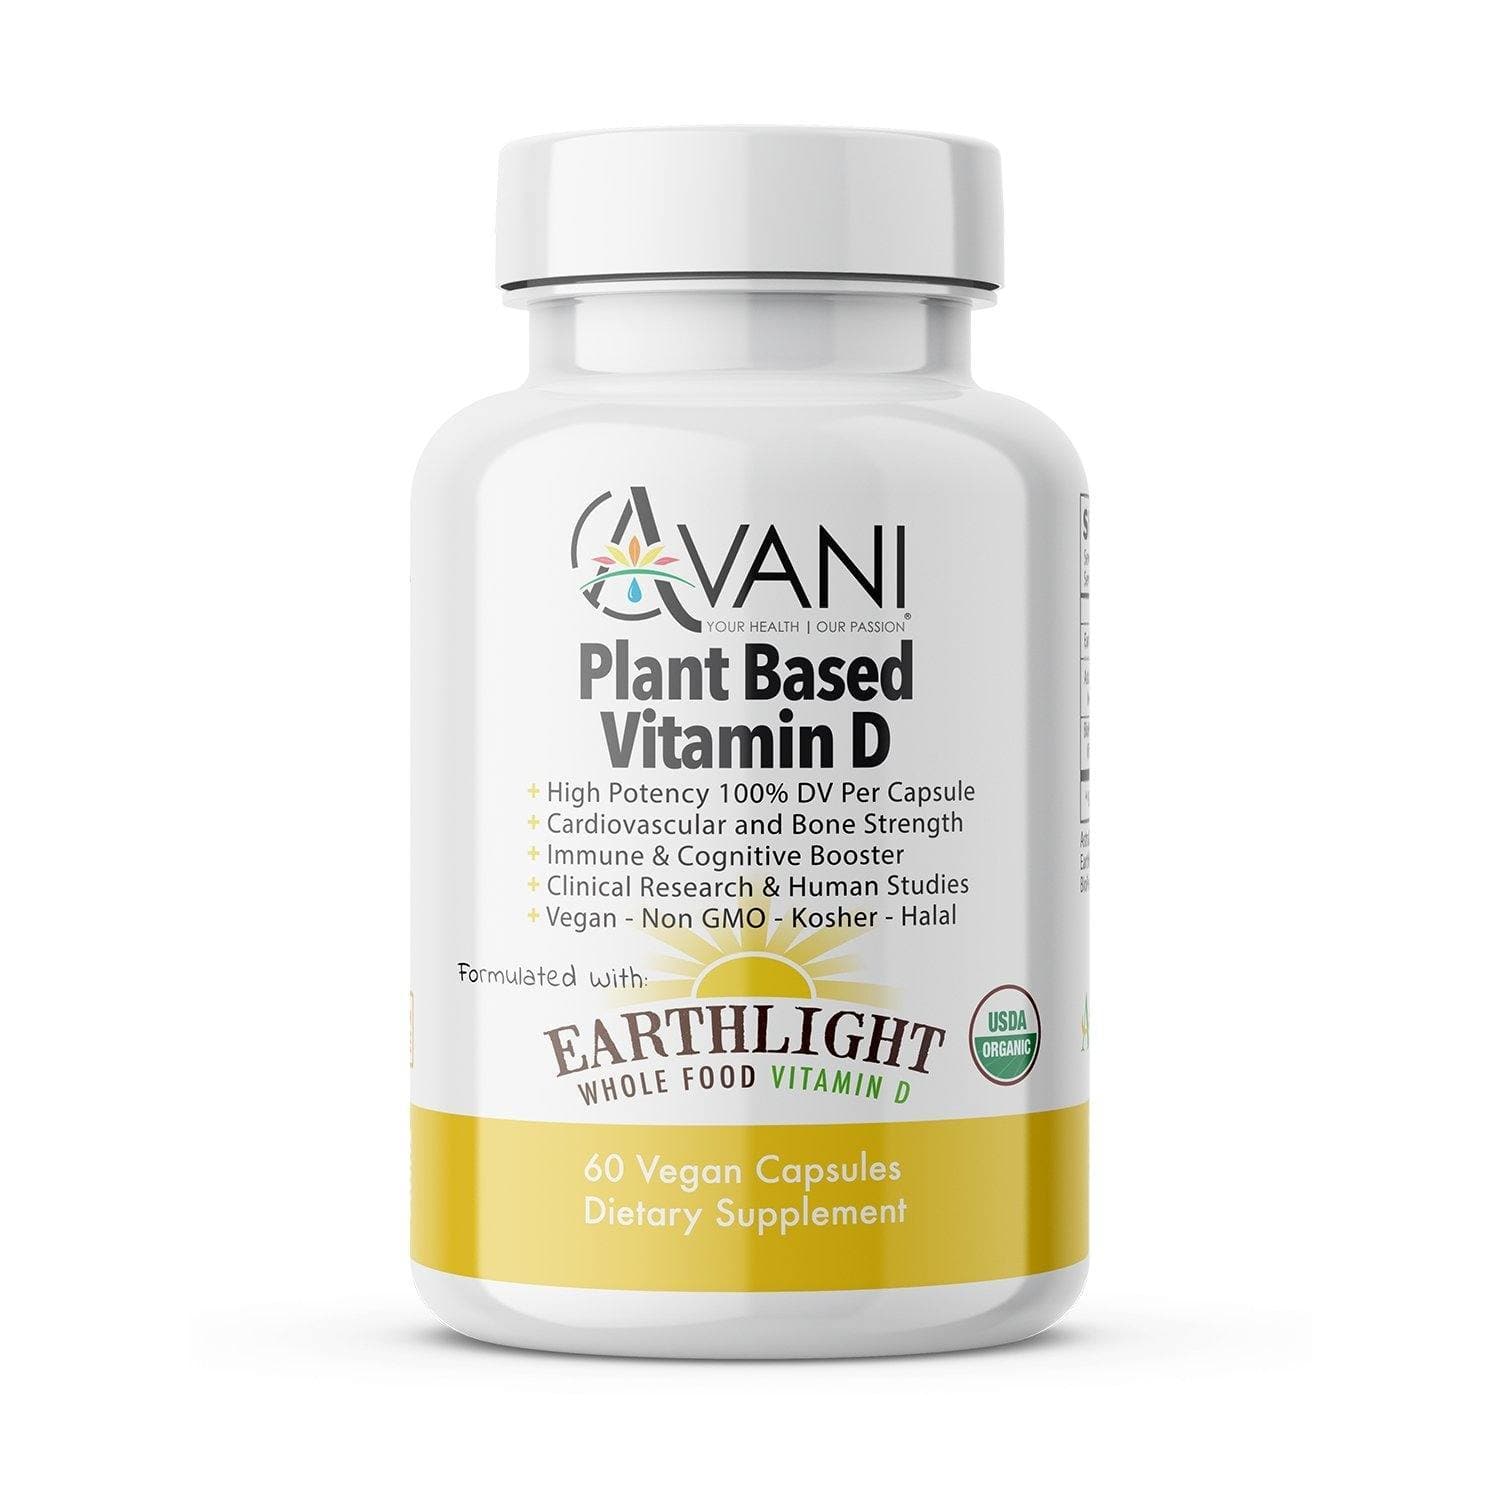 Earthlight® Plant Based Vitamin D - Avani Wellness